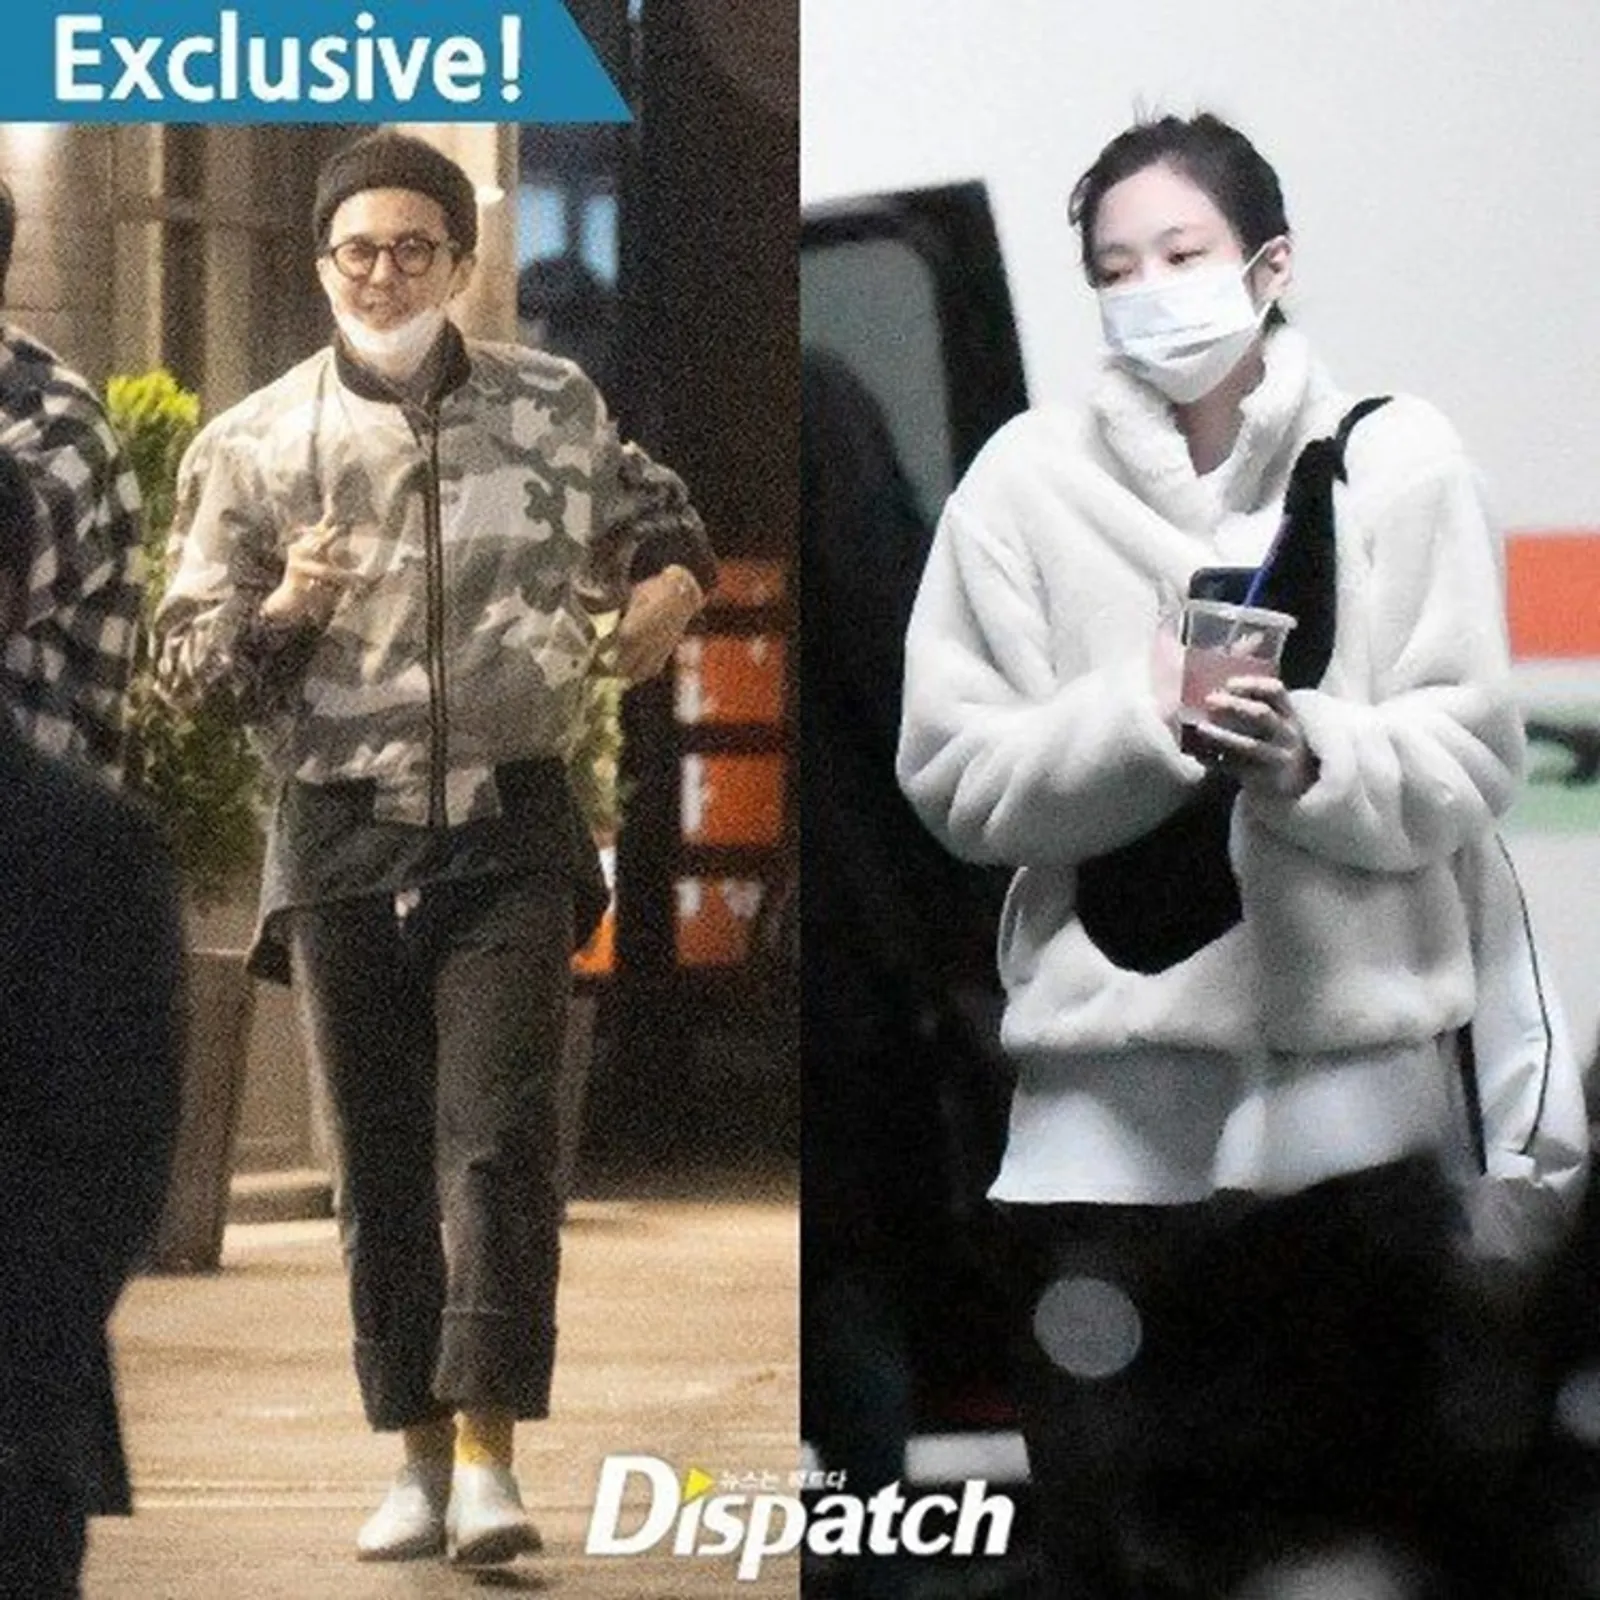 Ketahuan Pacaran, 9 Momen Kedekatan G-Dragon dan Jennie 'BLACKPINK'